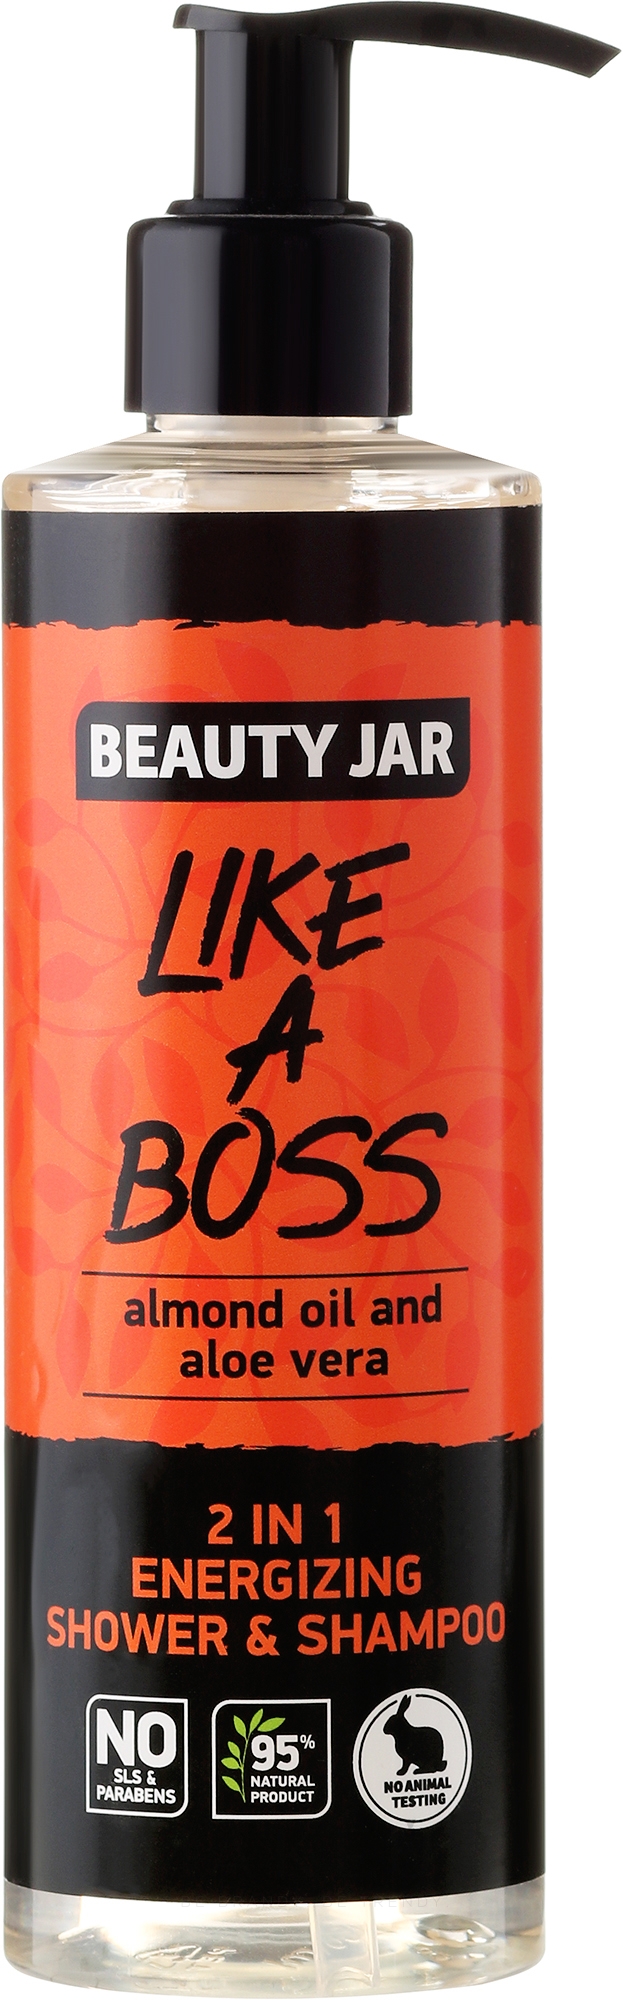 2in1 Energetisierendes Shampoo & Duschgel mit Mandelöl und Aloe Vera "Like A Boss" - Beauty Jar 2in1Energizing Shower & Shampoo — Bild 250 ml